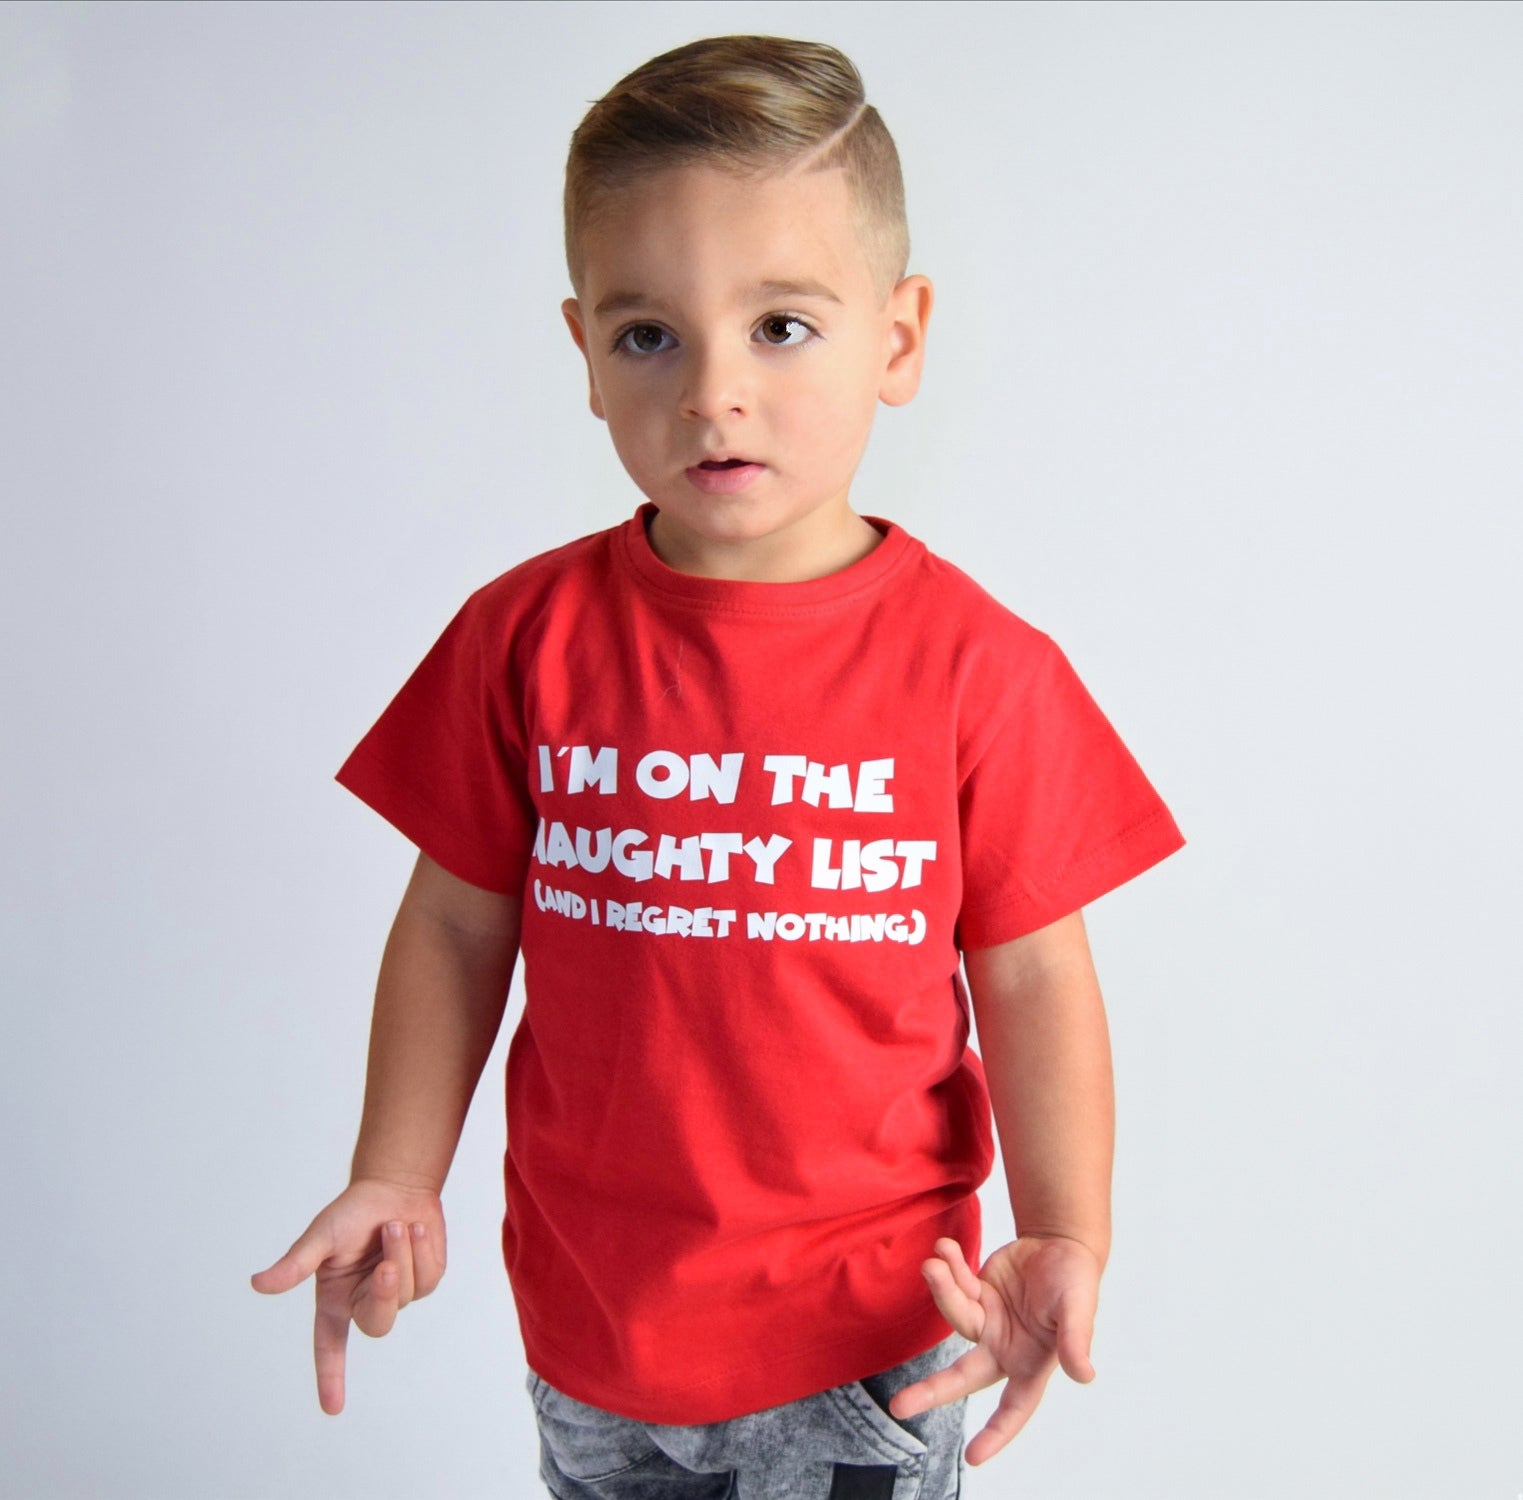 'I'm on the naughty list' kids shortsleeve shirt